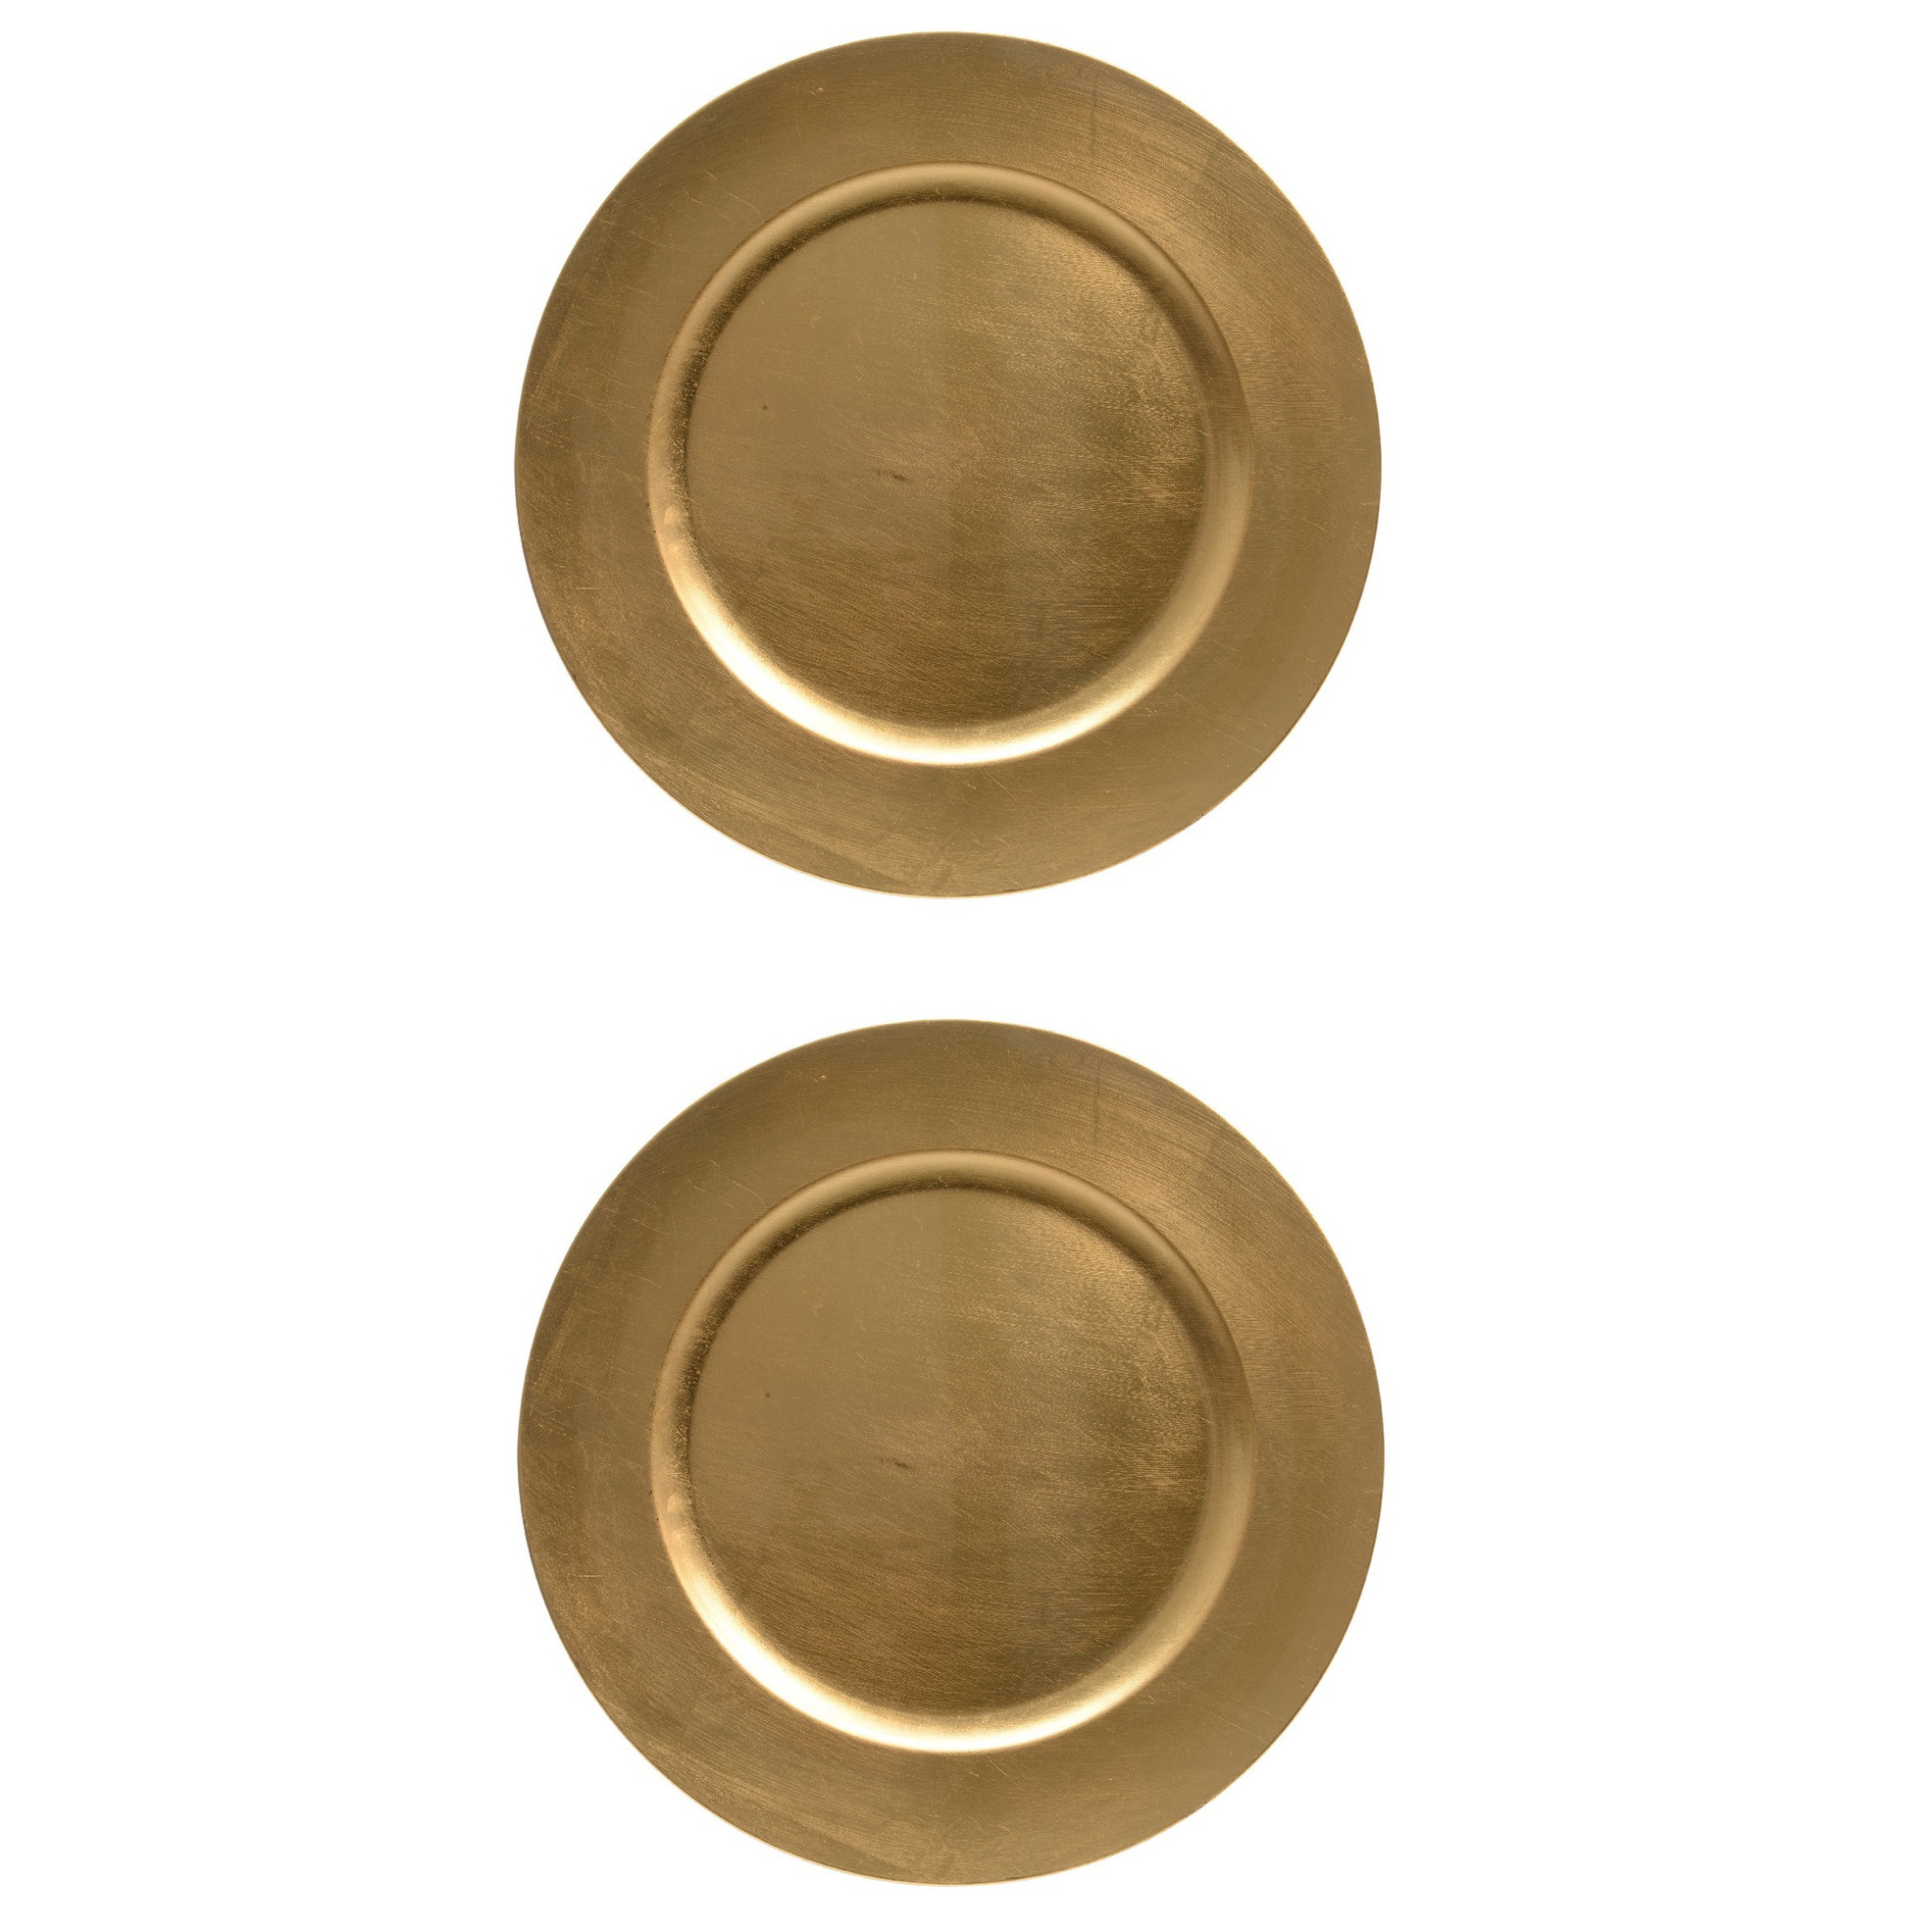 8x stuks diner borden-onderborden goud glimmend 33 cm